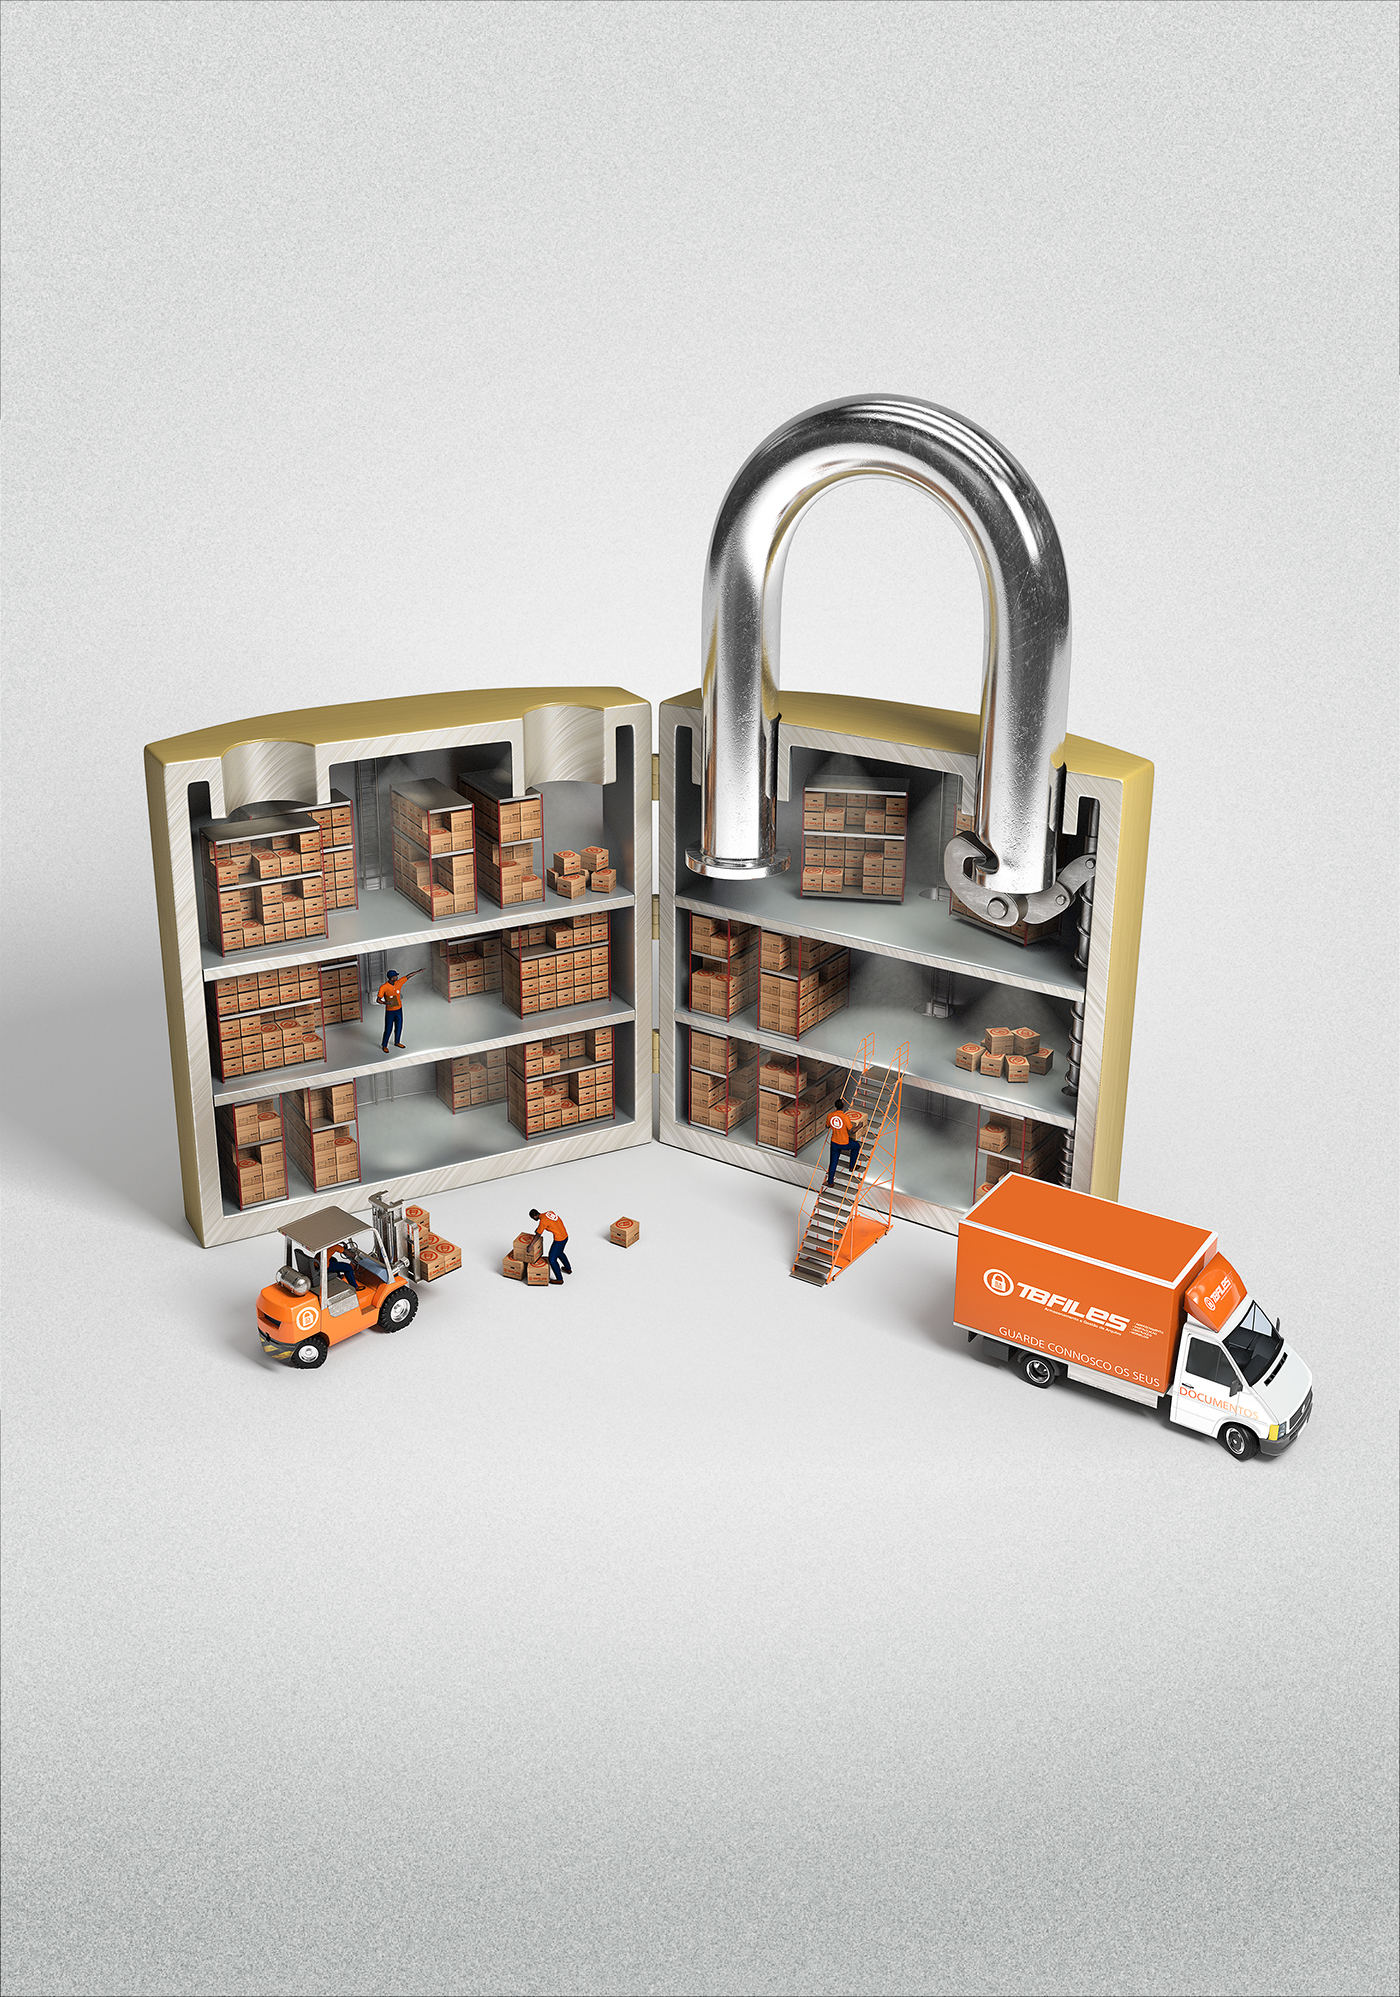 TBFILES safe cadeado storage Van 3D advertising_artur artur_carvalho MINI 3D